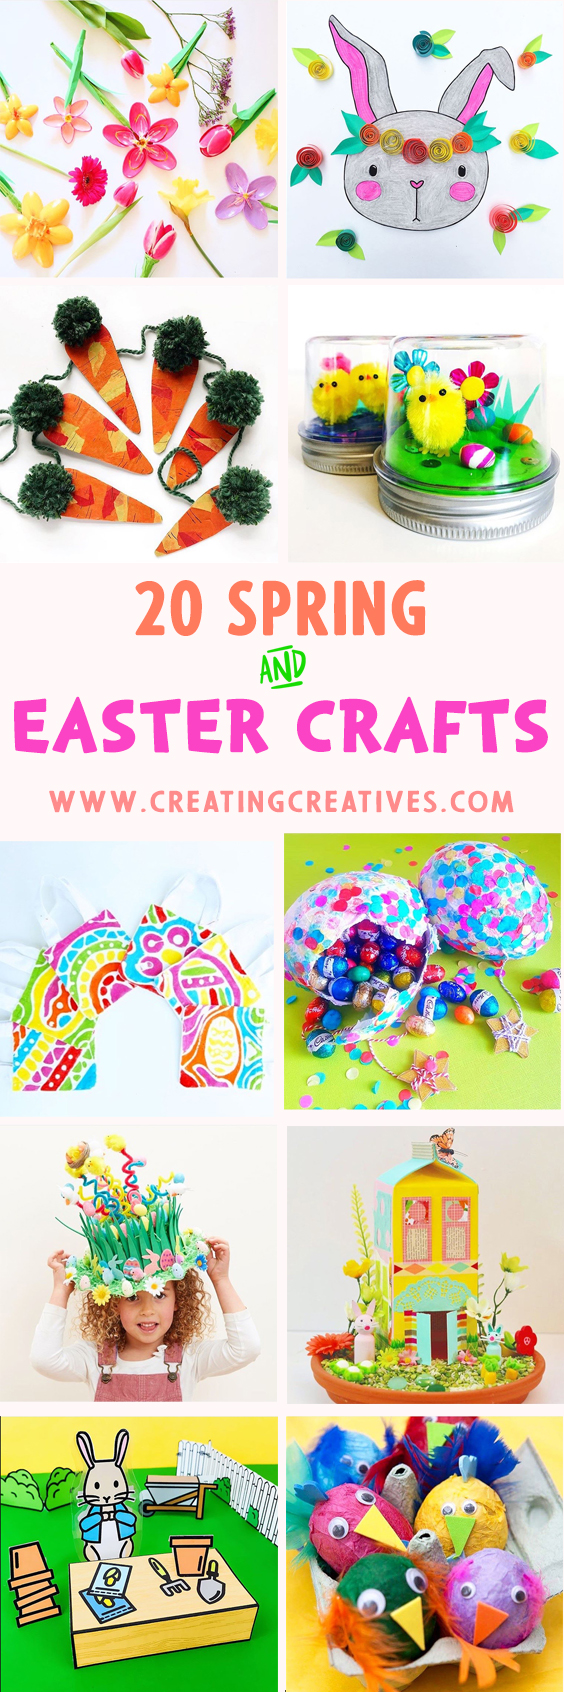 Hopfest 20 Spring and Easter Crafts for Kids